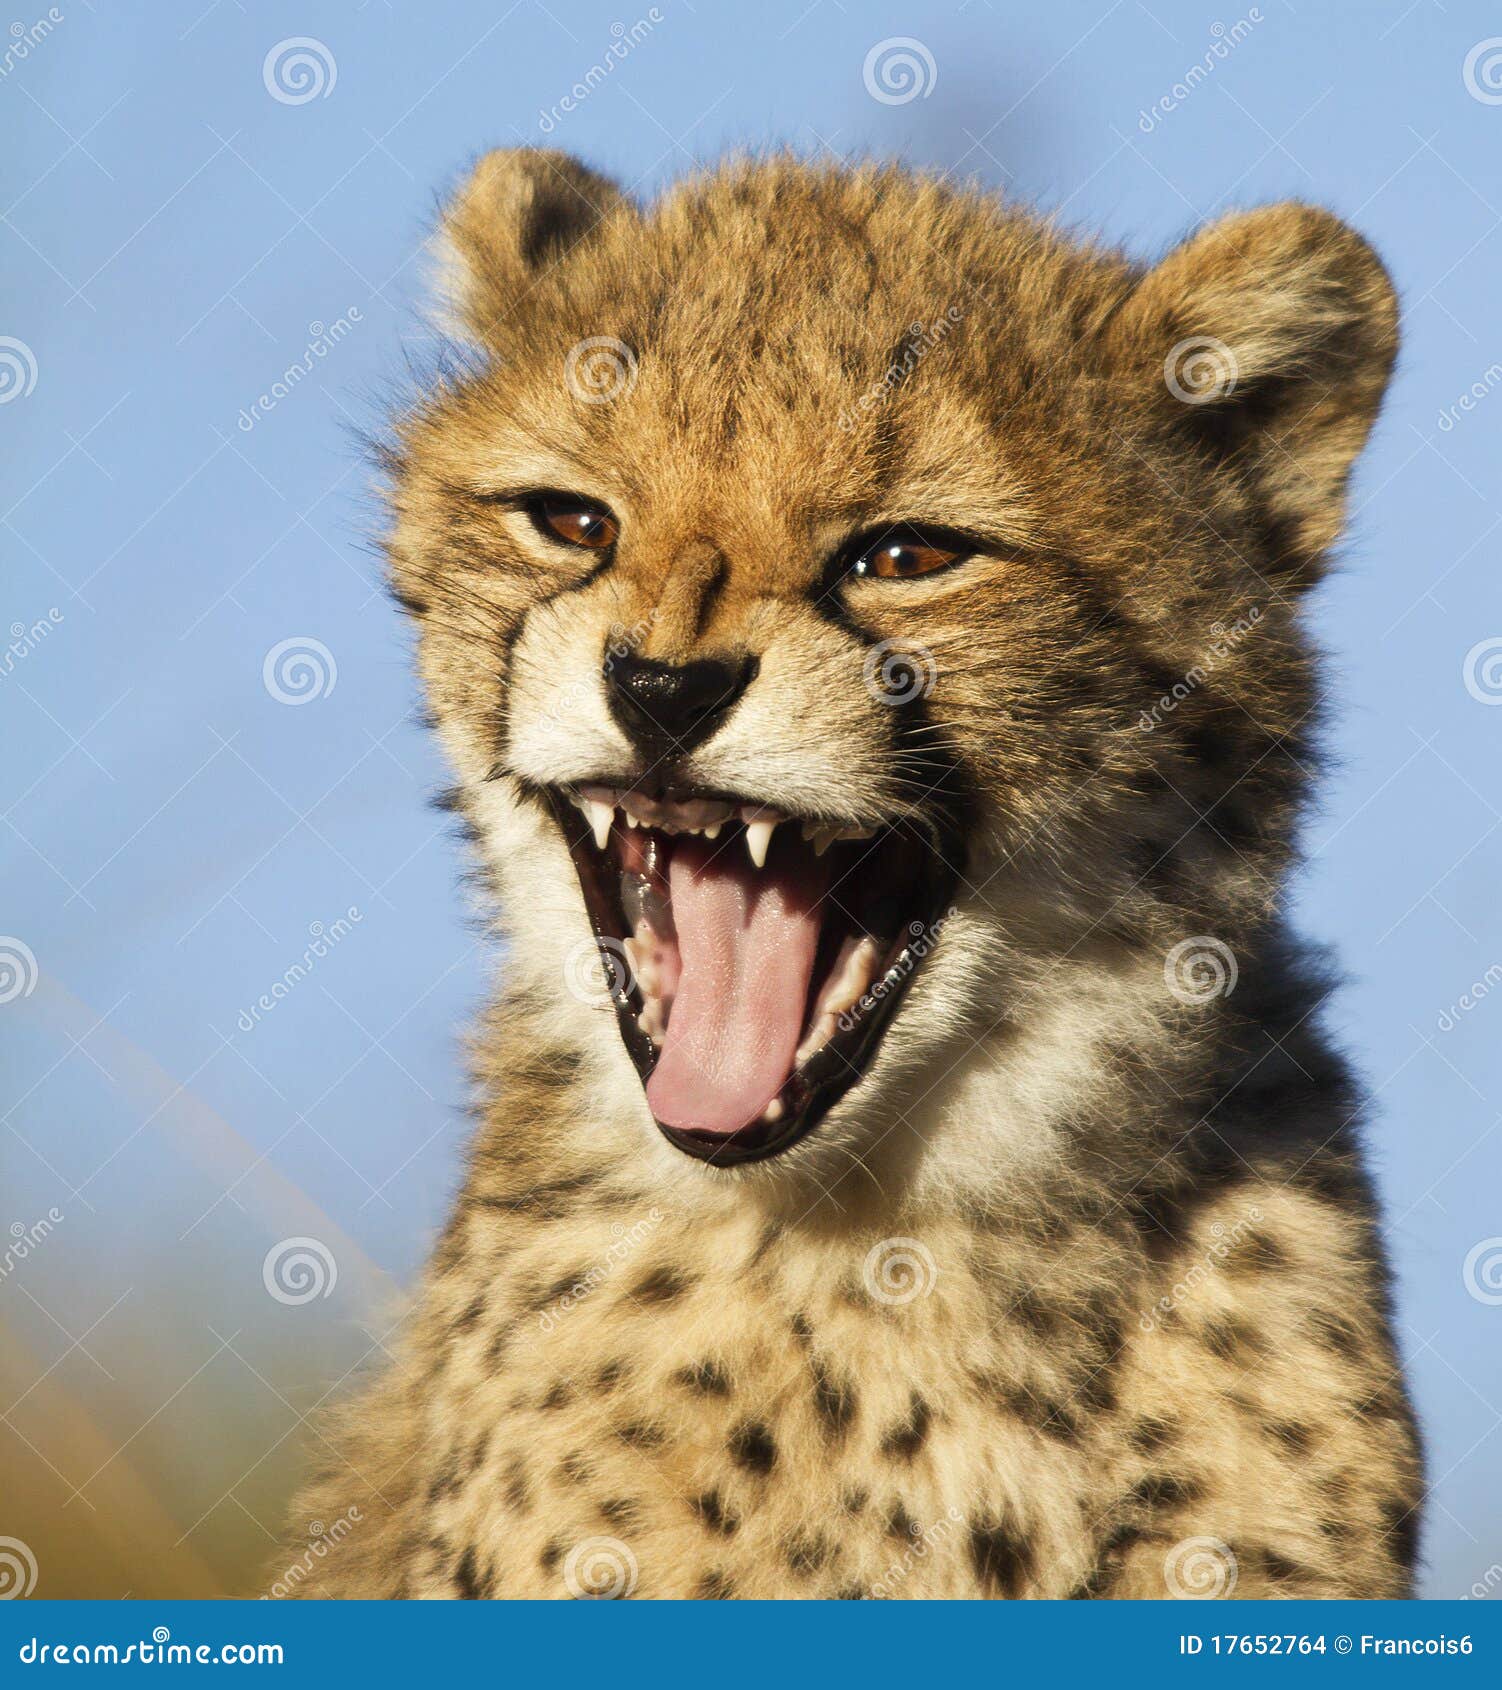 cheetah yawn